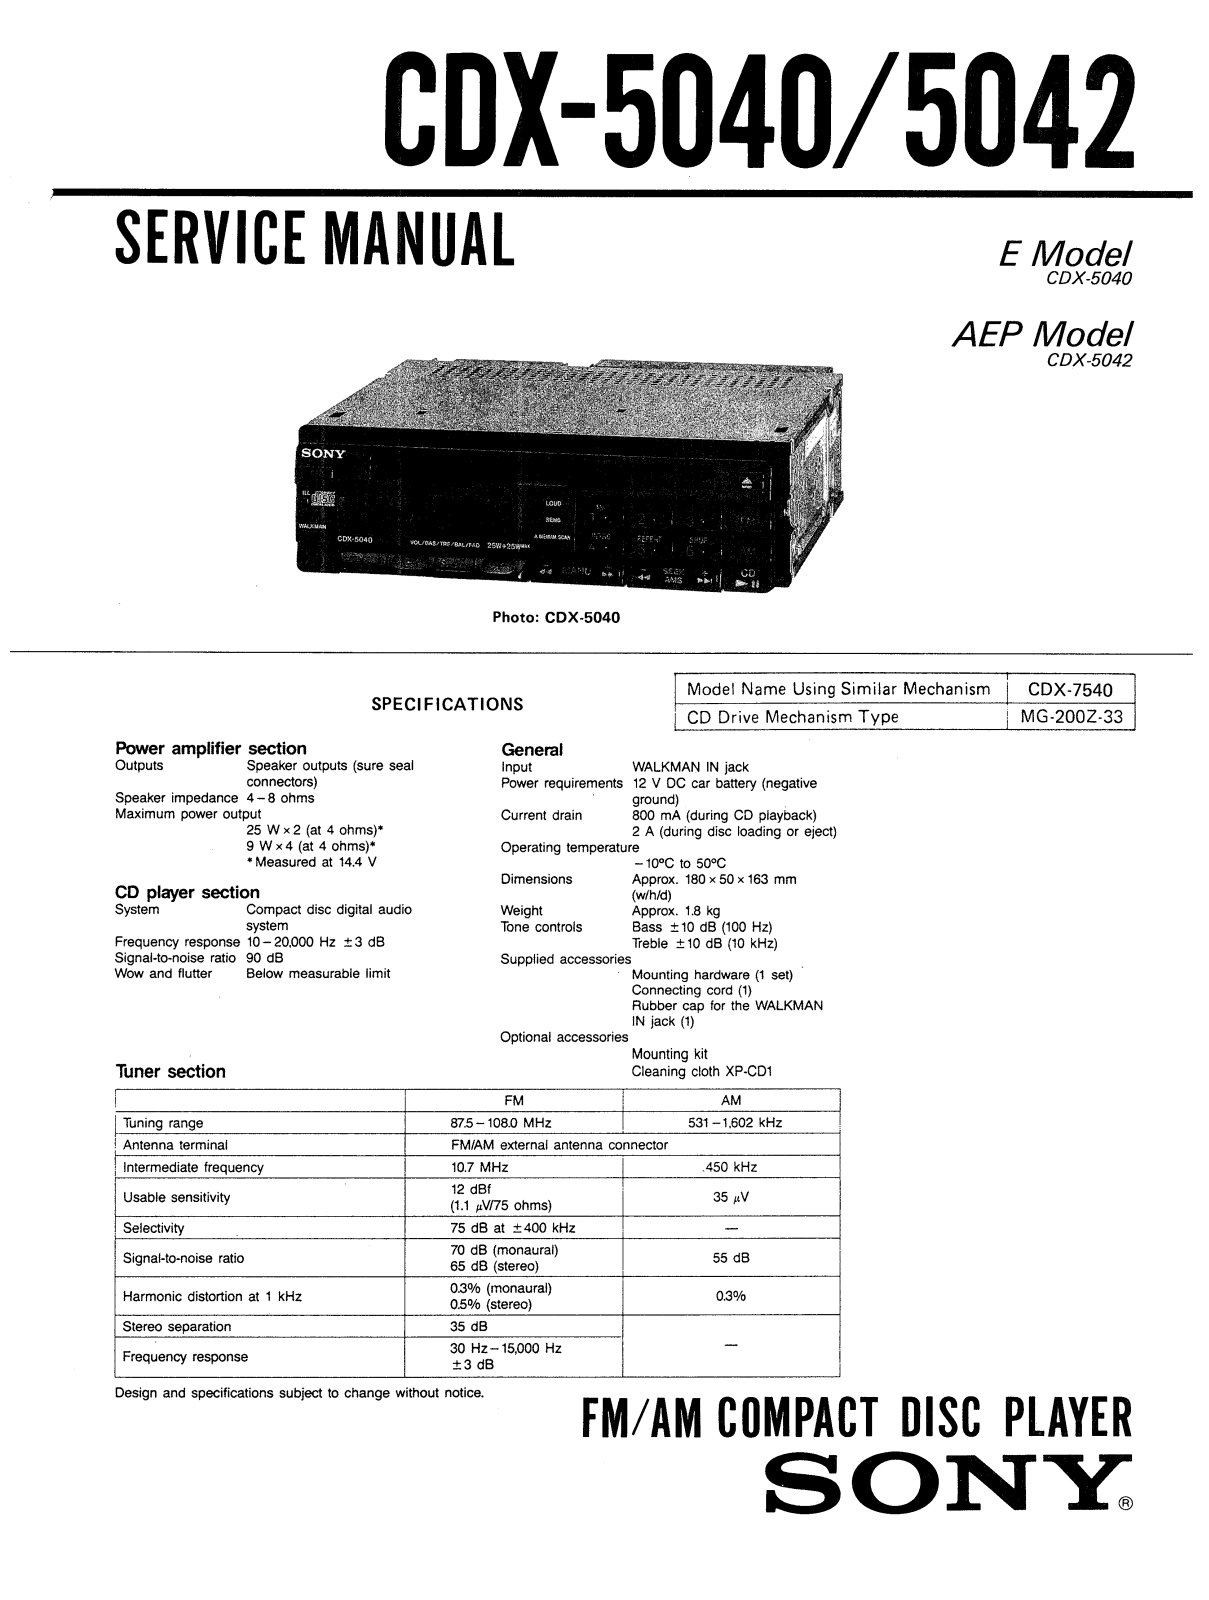 Sony CDX-5040, CDX-5042 Service Manual